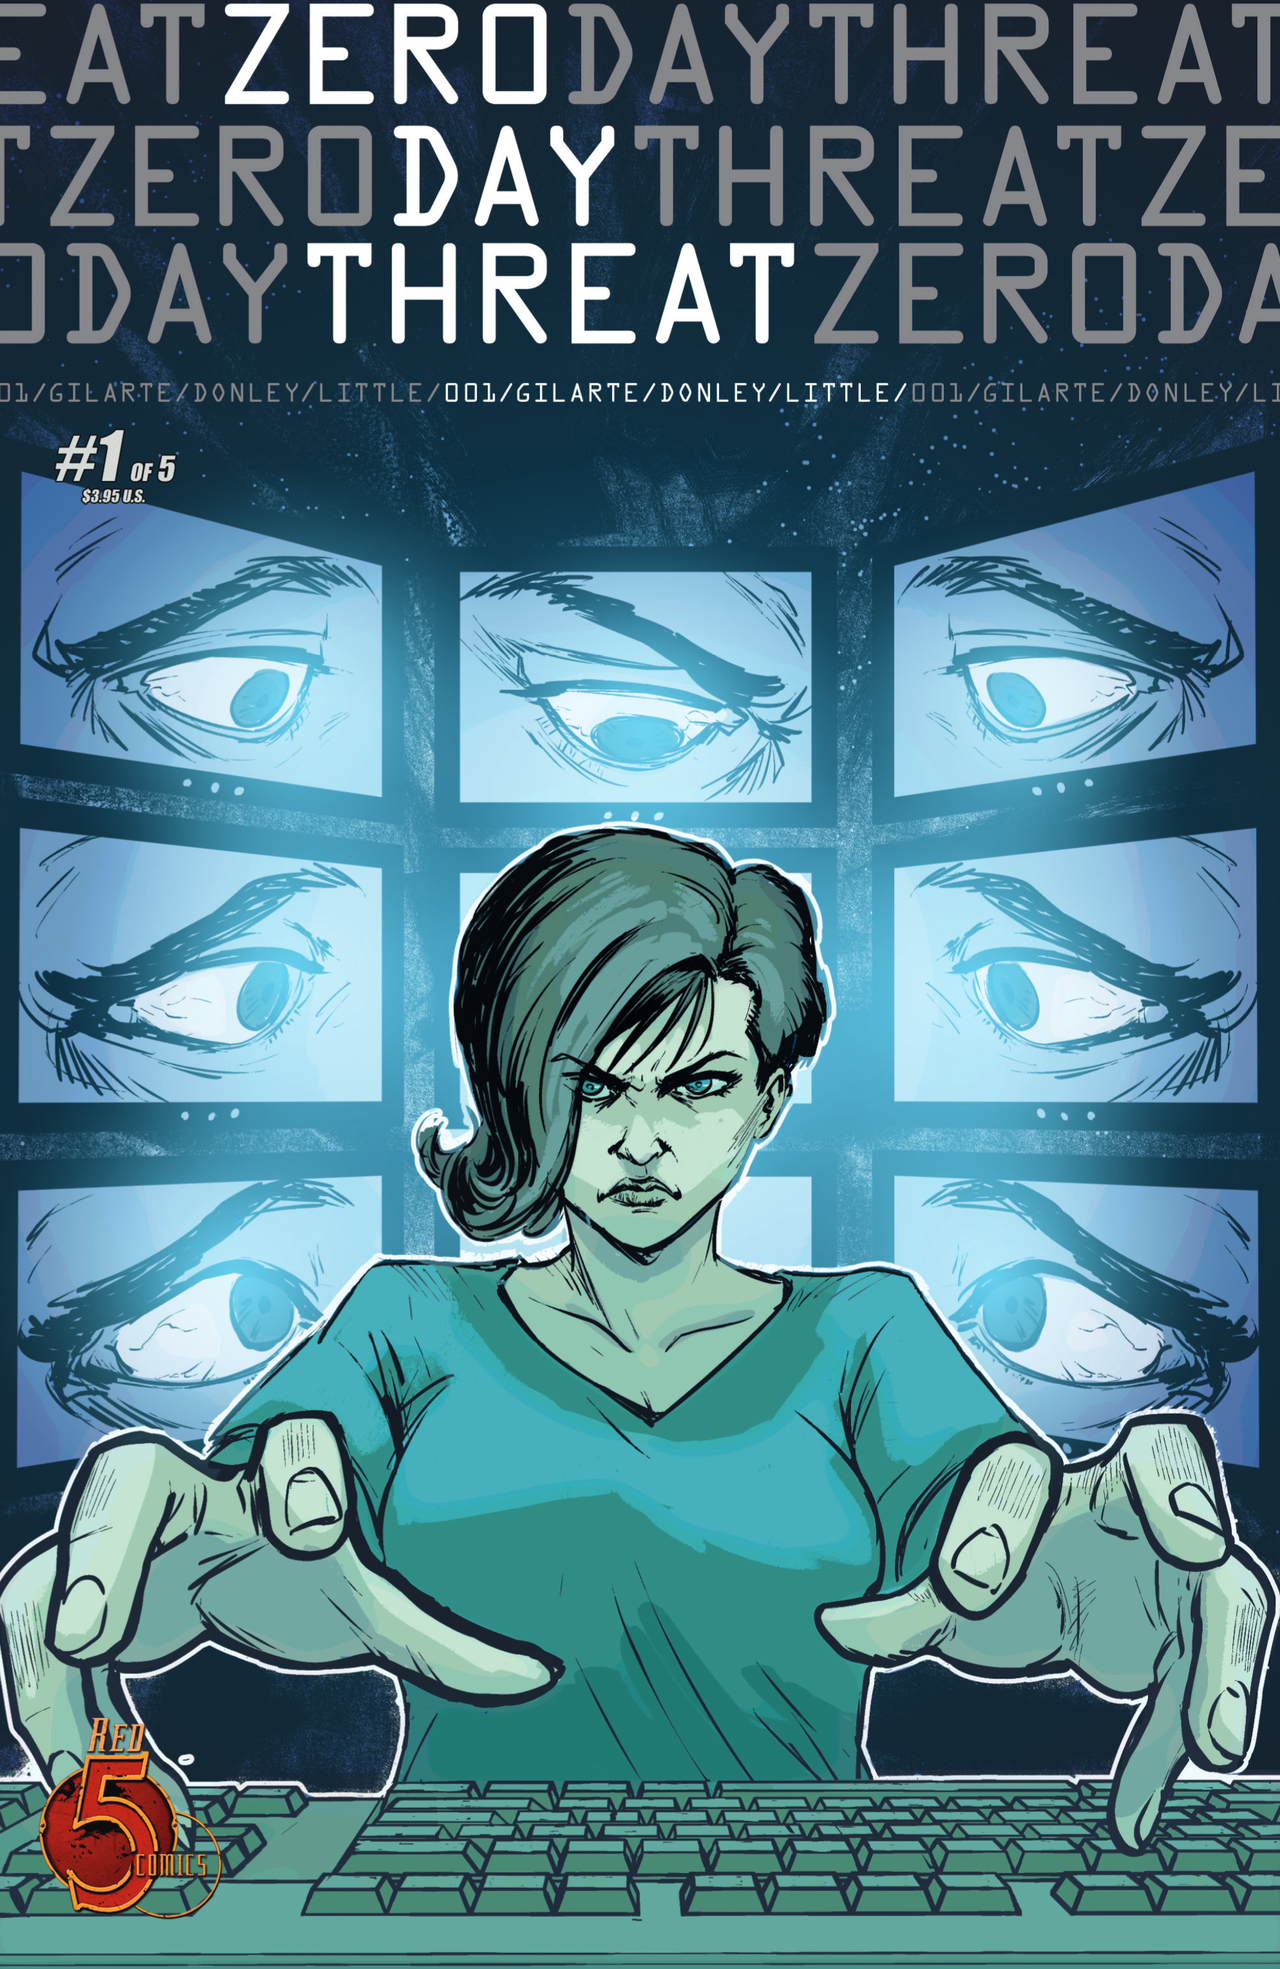 Read online Zero Day Threat comic -  Issue #1 - 1